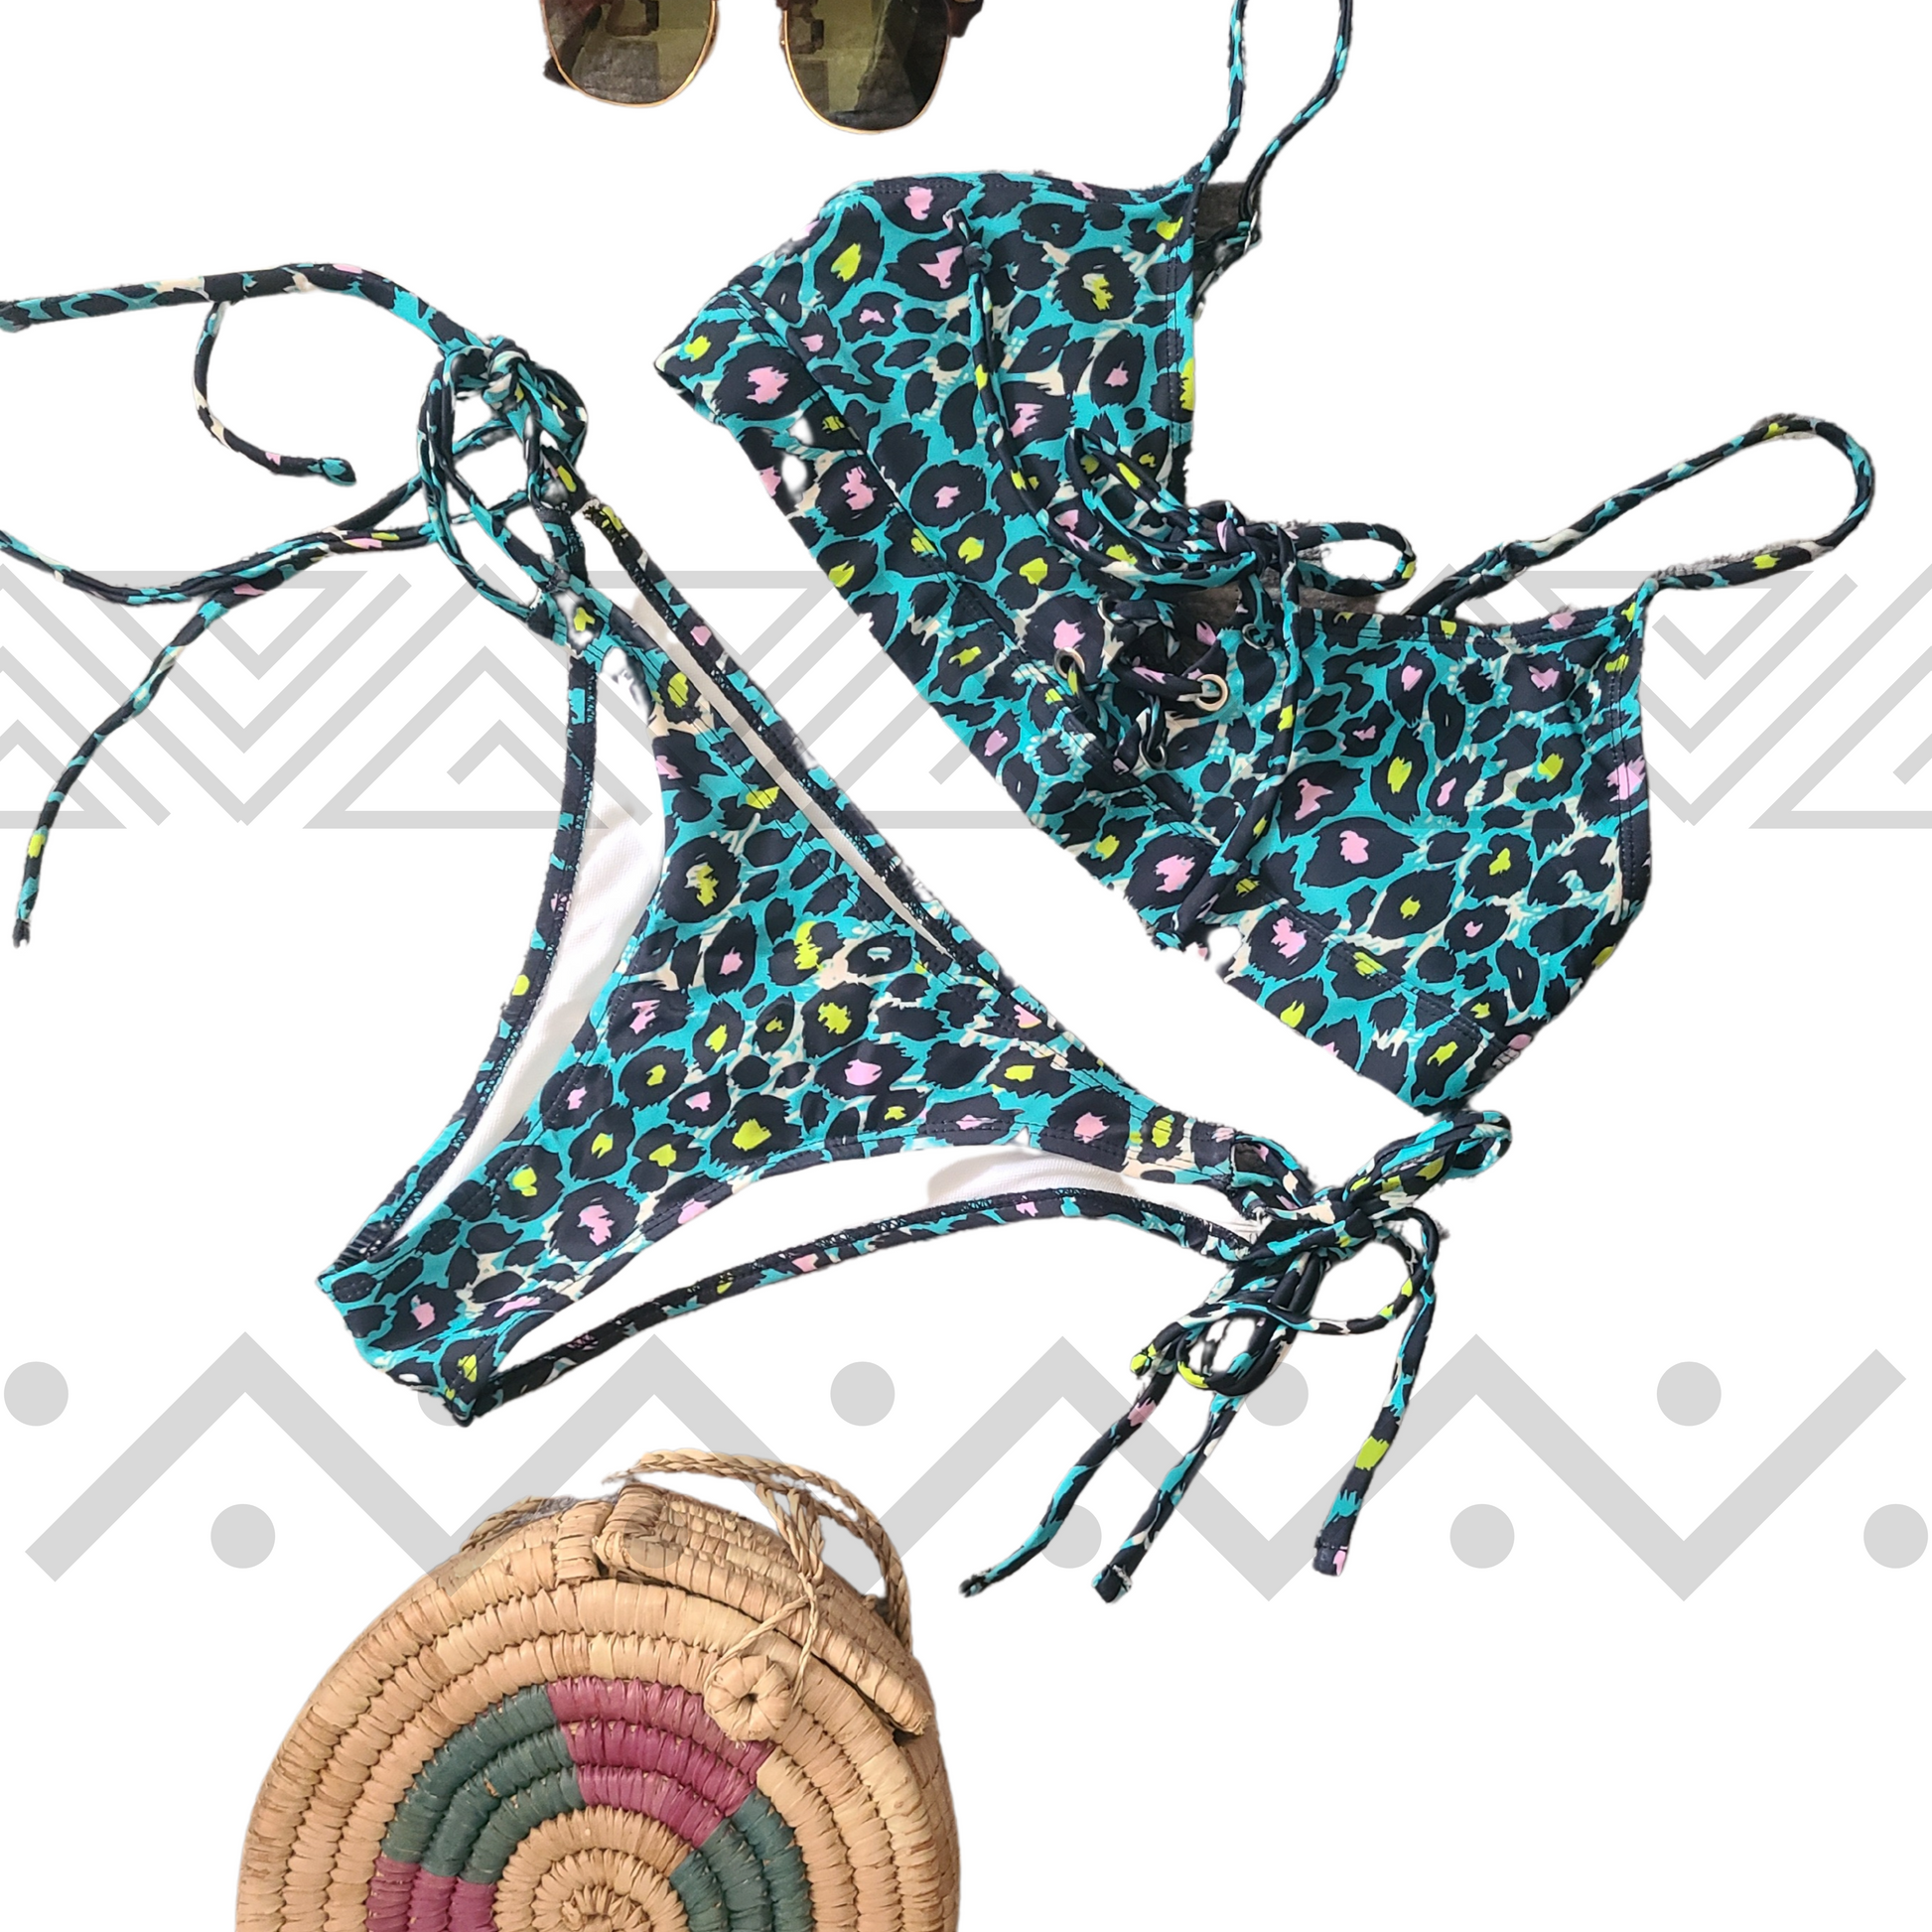 A spaghetti strap bikini set in a bold cheetah pattern with a double-strap bottom.